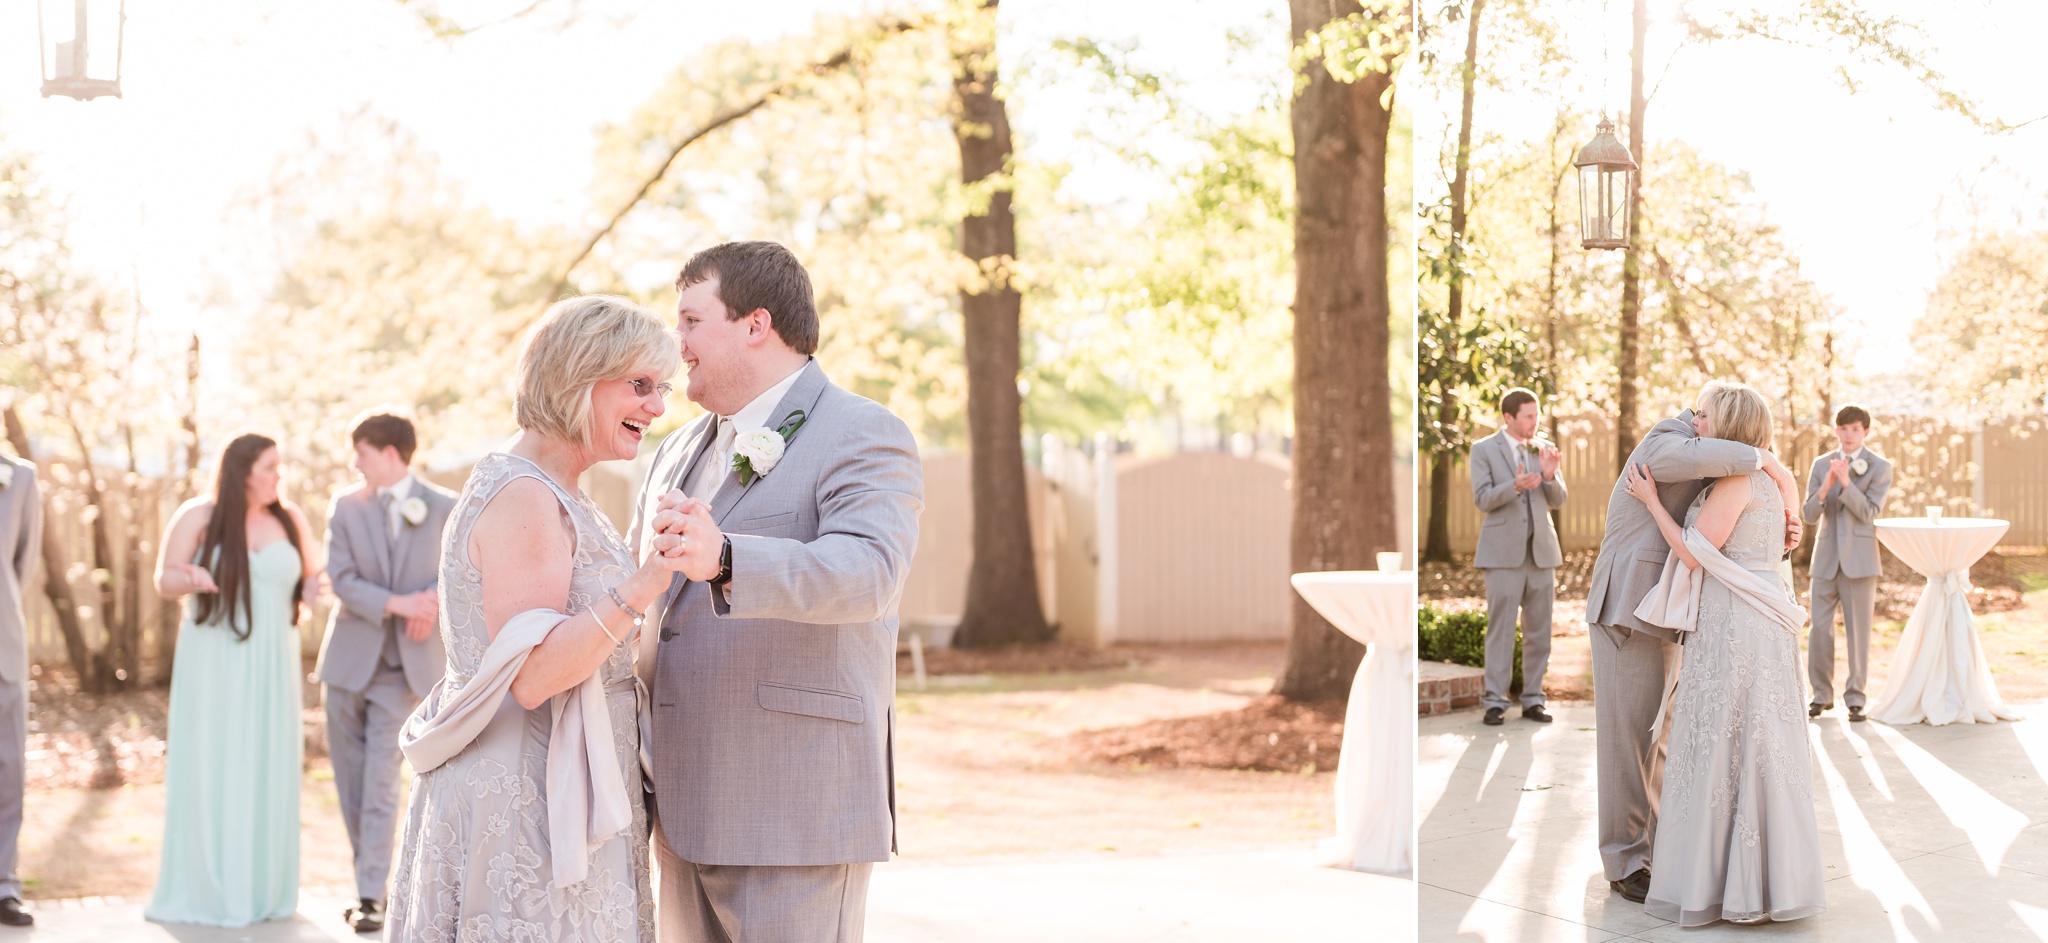 Aqua and Teal Spring Garden Wedding | Birmingham Alabama Wedding Photographers_0102.jpg